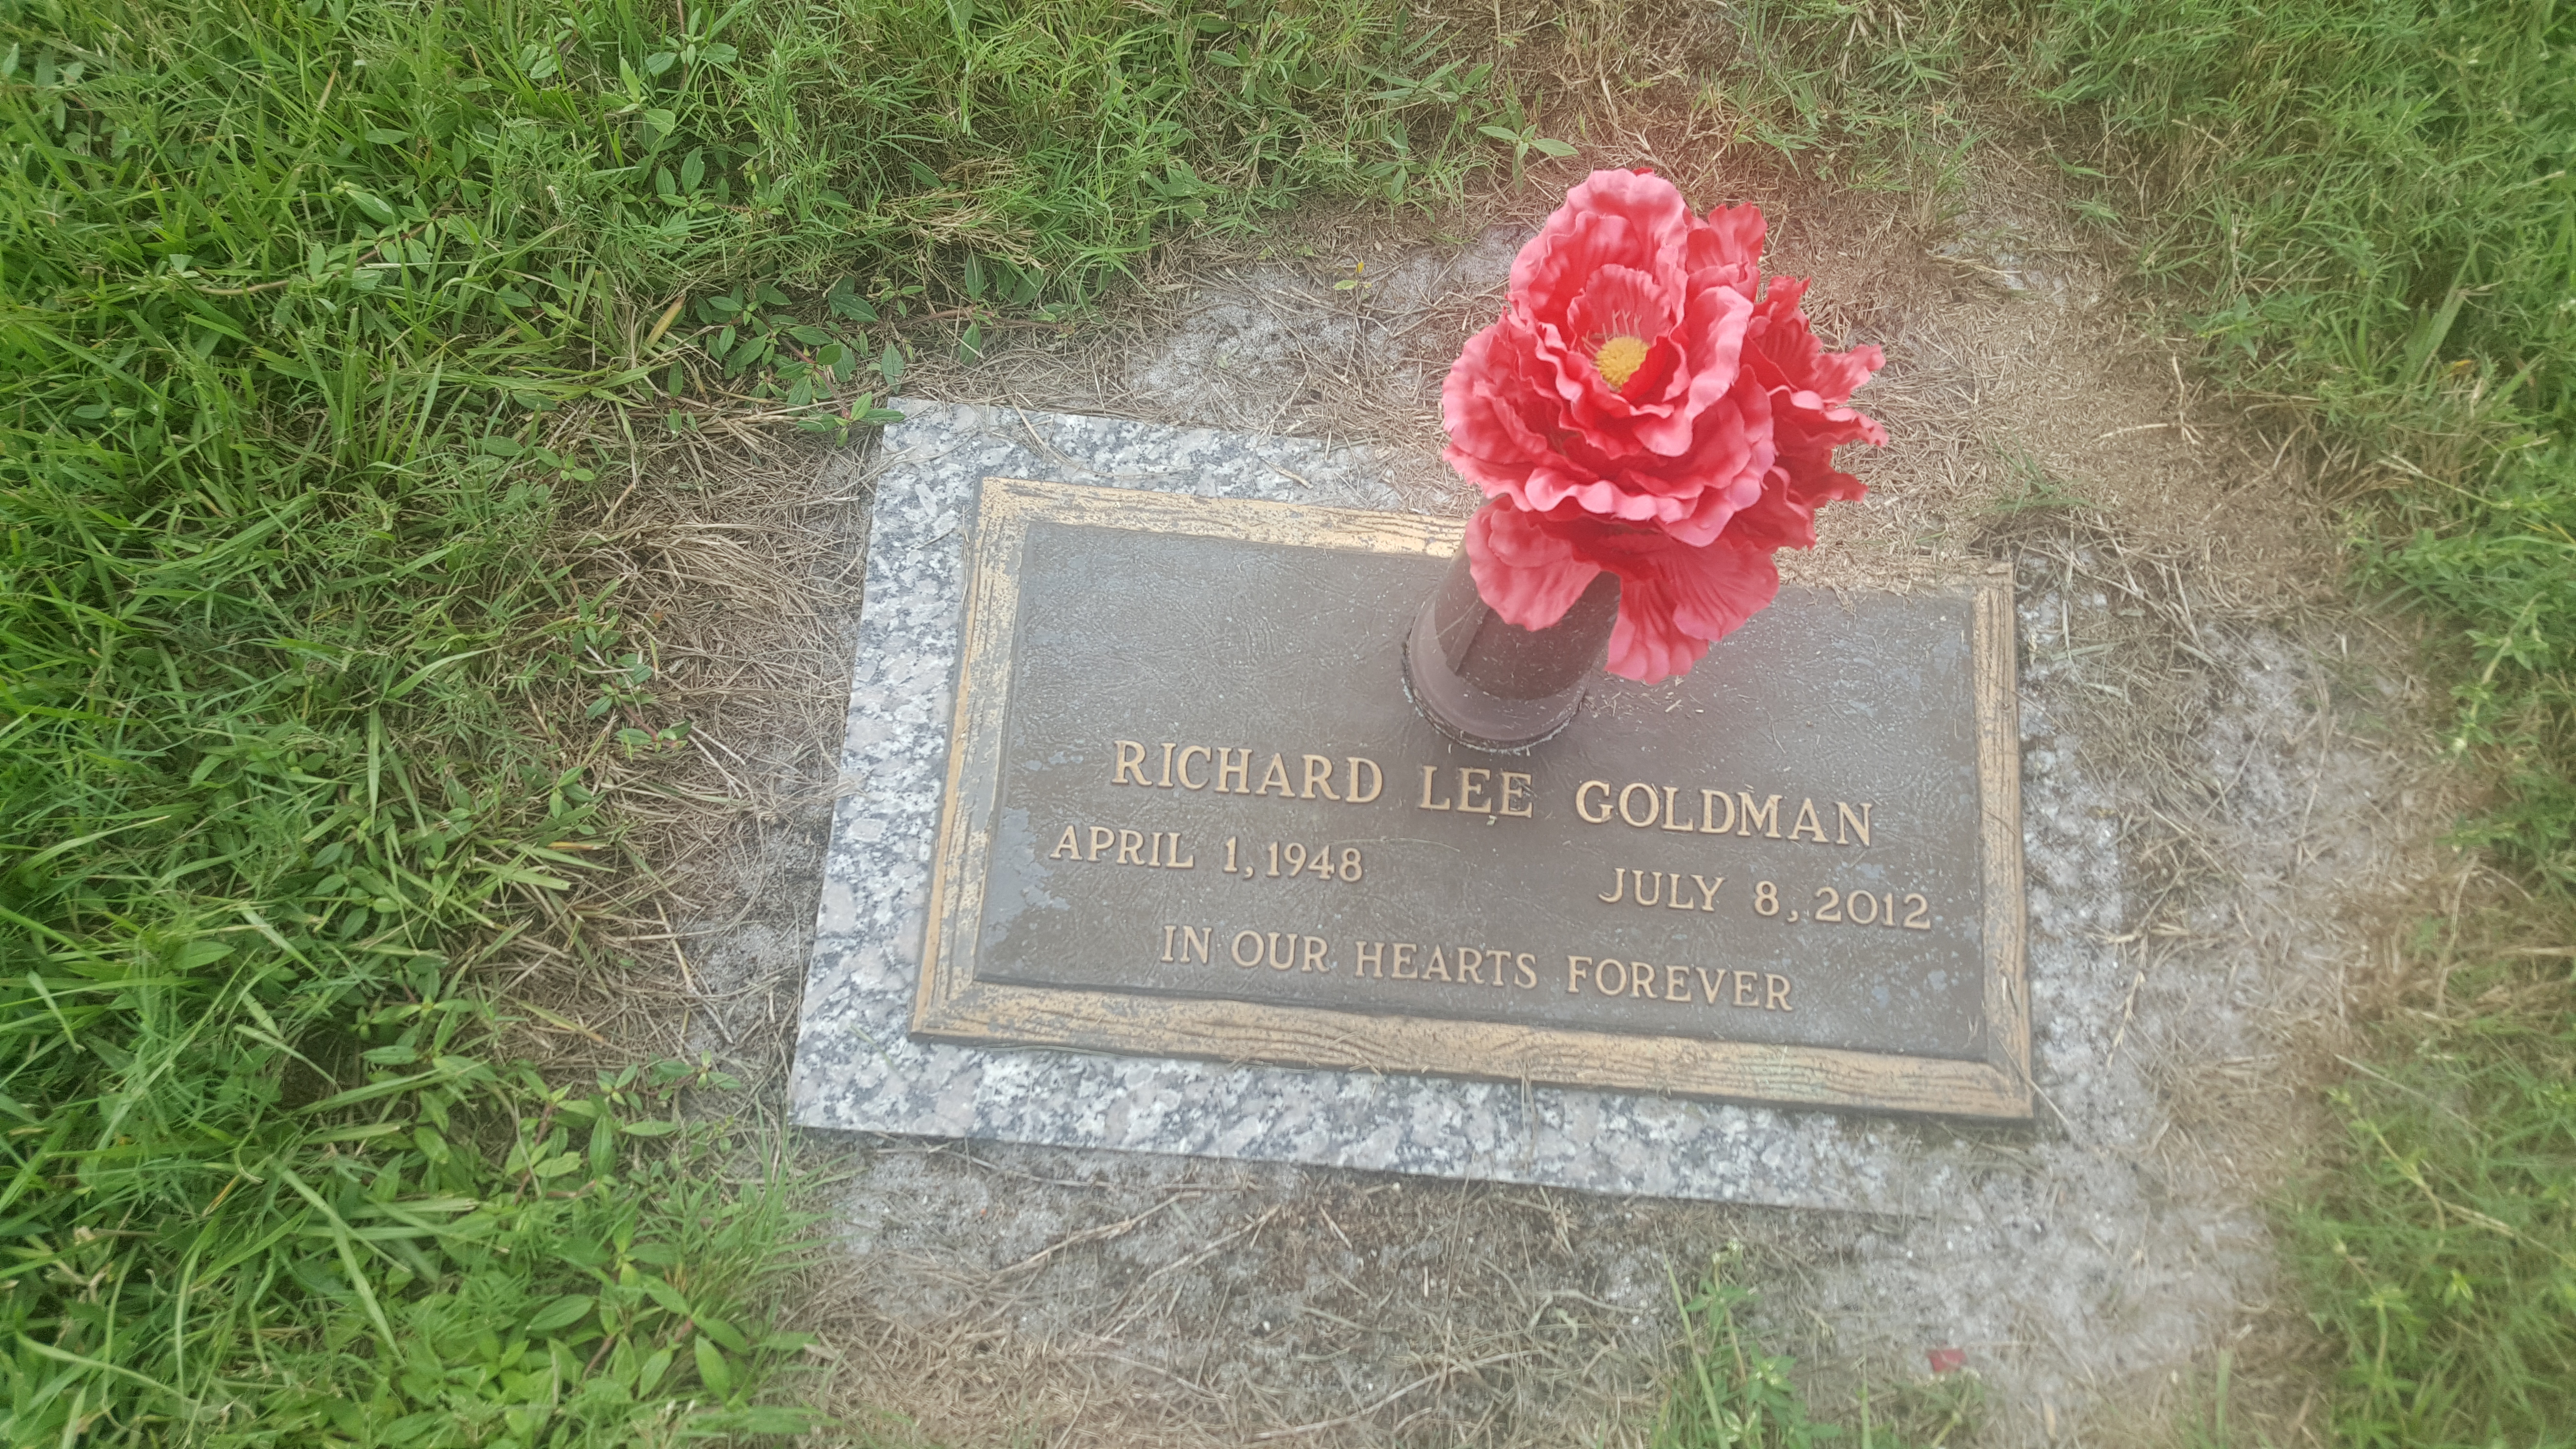 Richard Lee Goldman